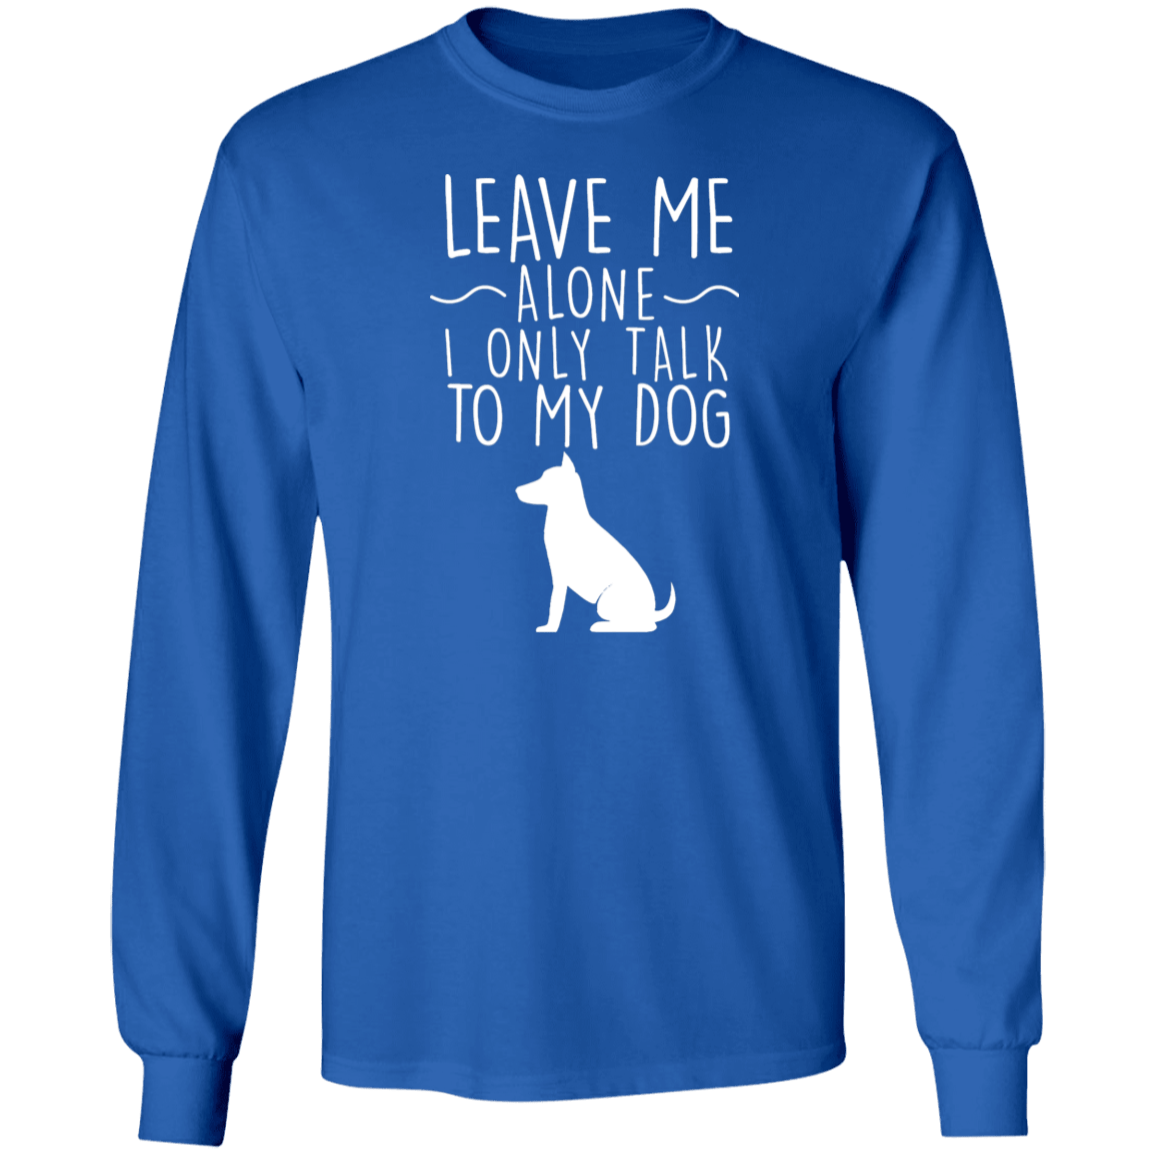 Leave Me Alone - Long Sleeve T Shirt.